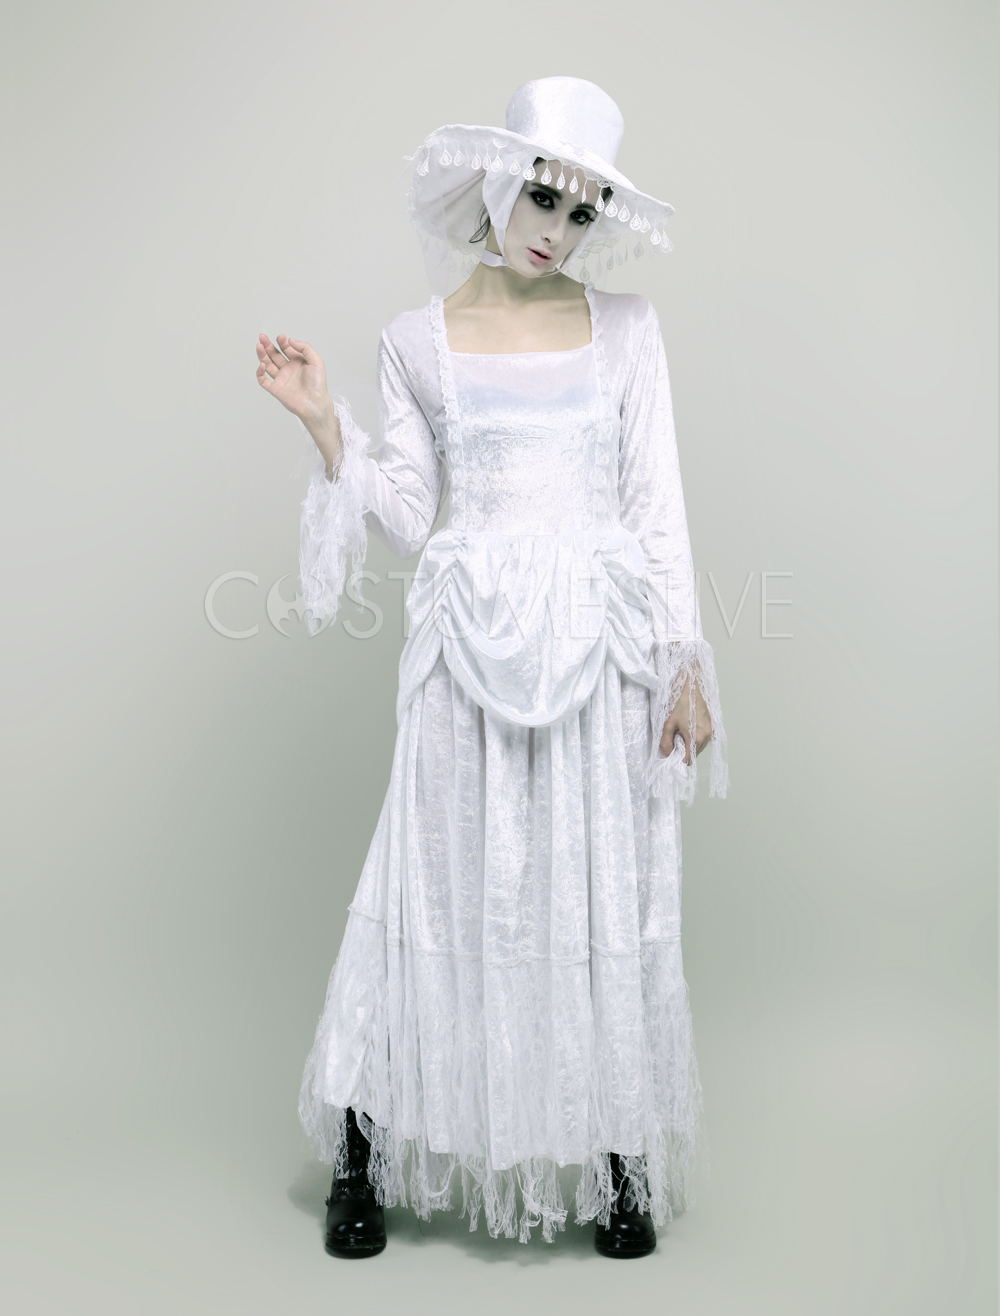 Halloween Zombie Costume Costume médiéval blanc Cosplay - Costumeslive.com